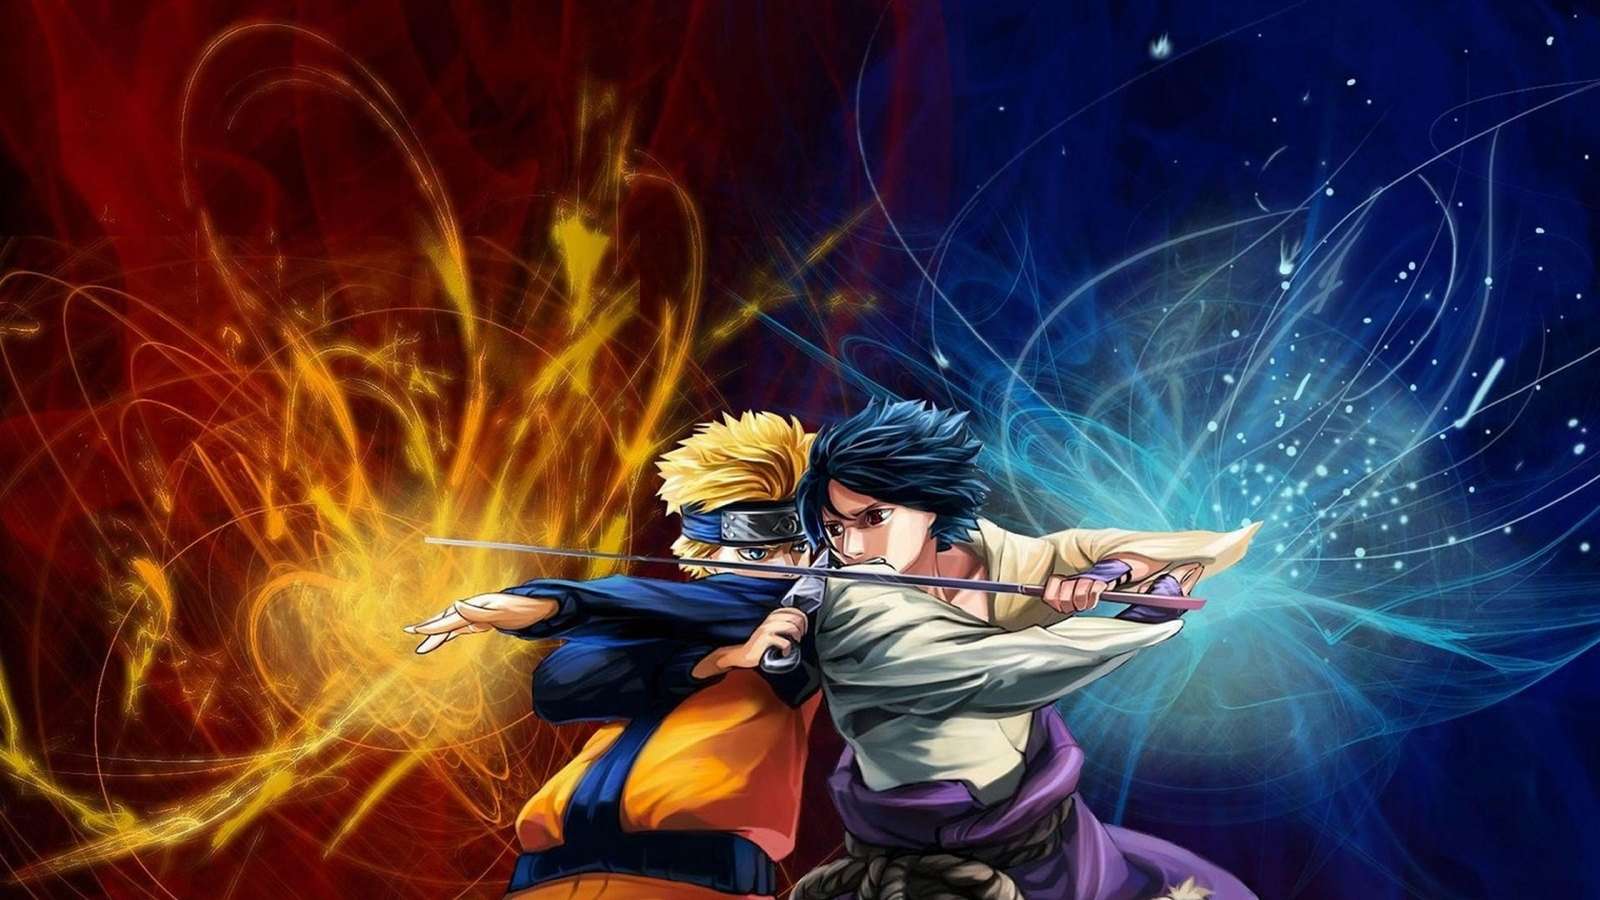 Naruto vs Sasuke Puzzlespiel online